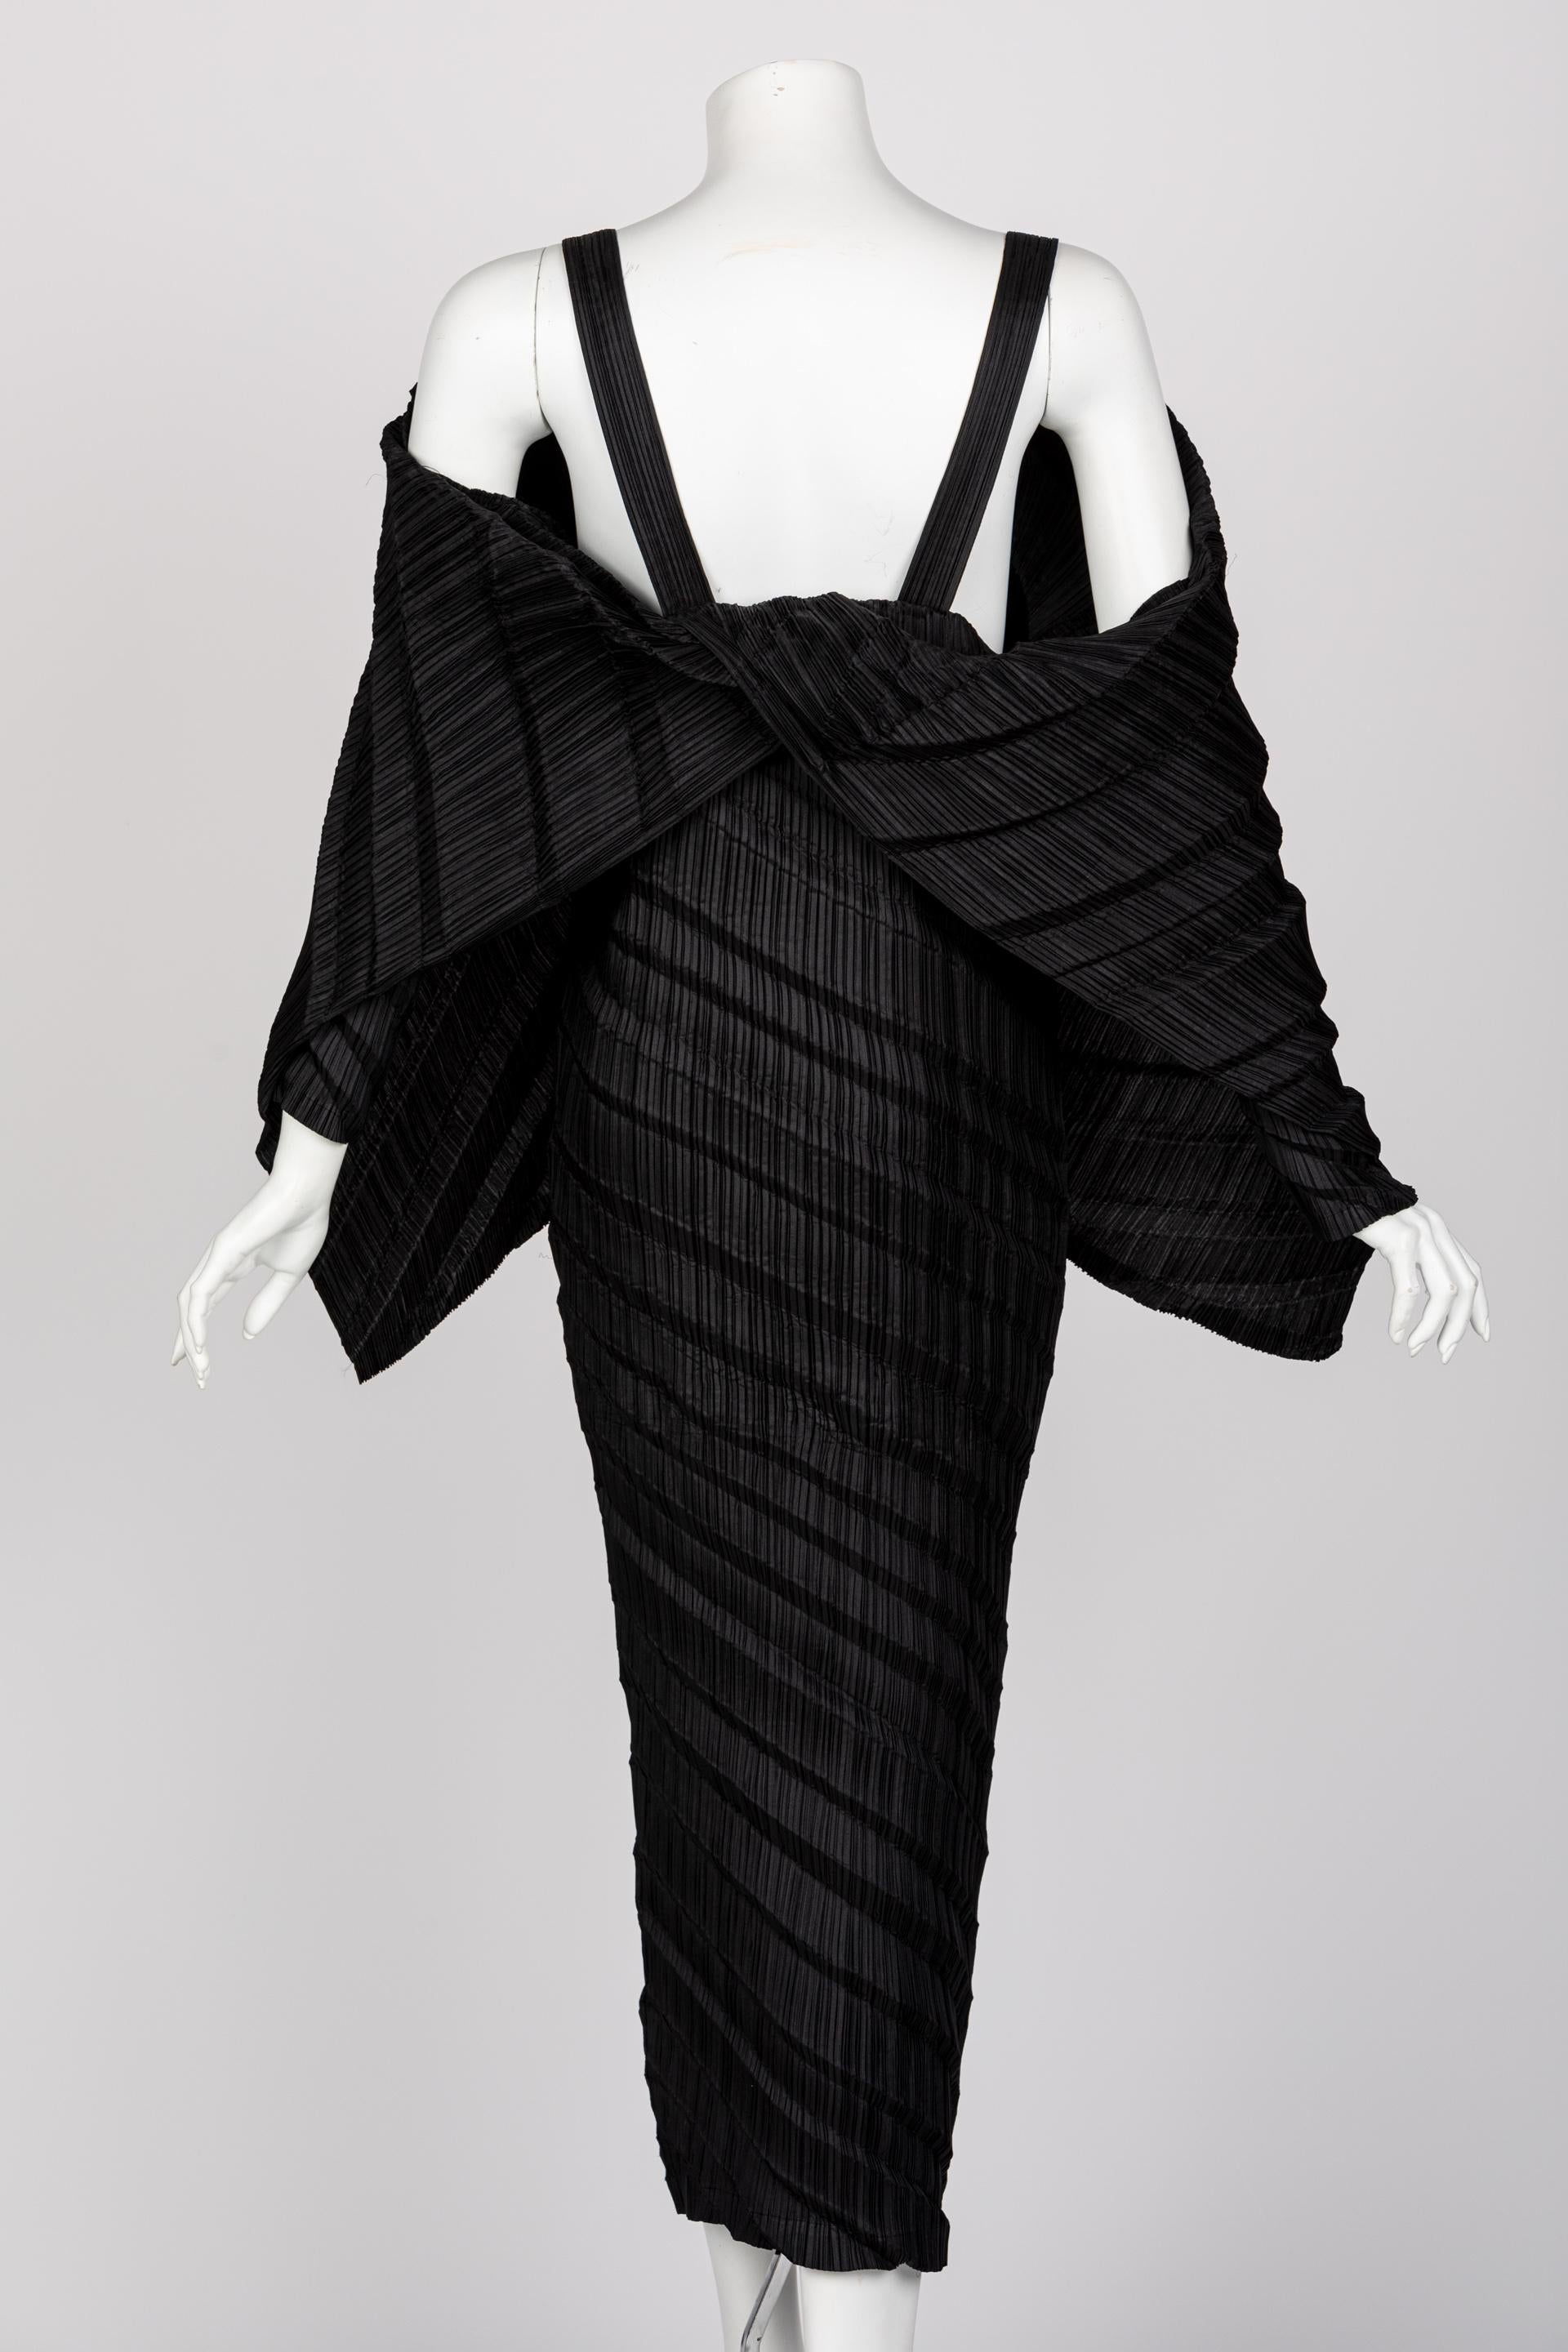 Women's Issey Miyake Black Pleated Sculptural Dress, 1990s